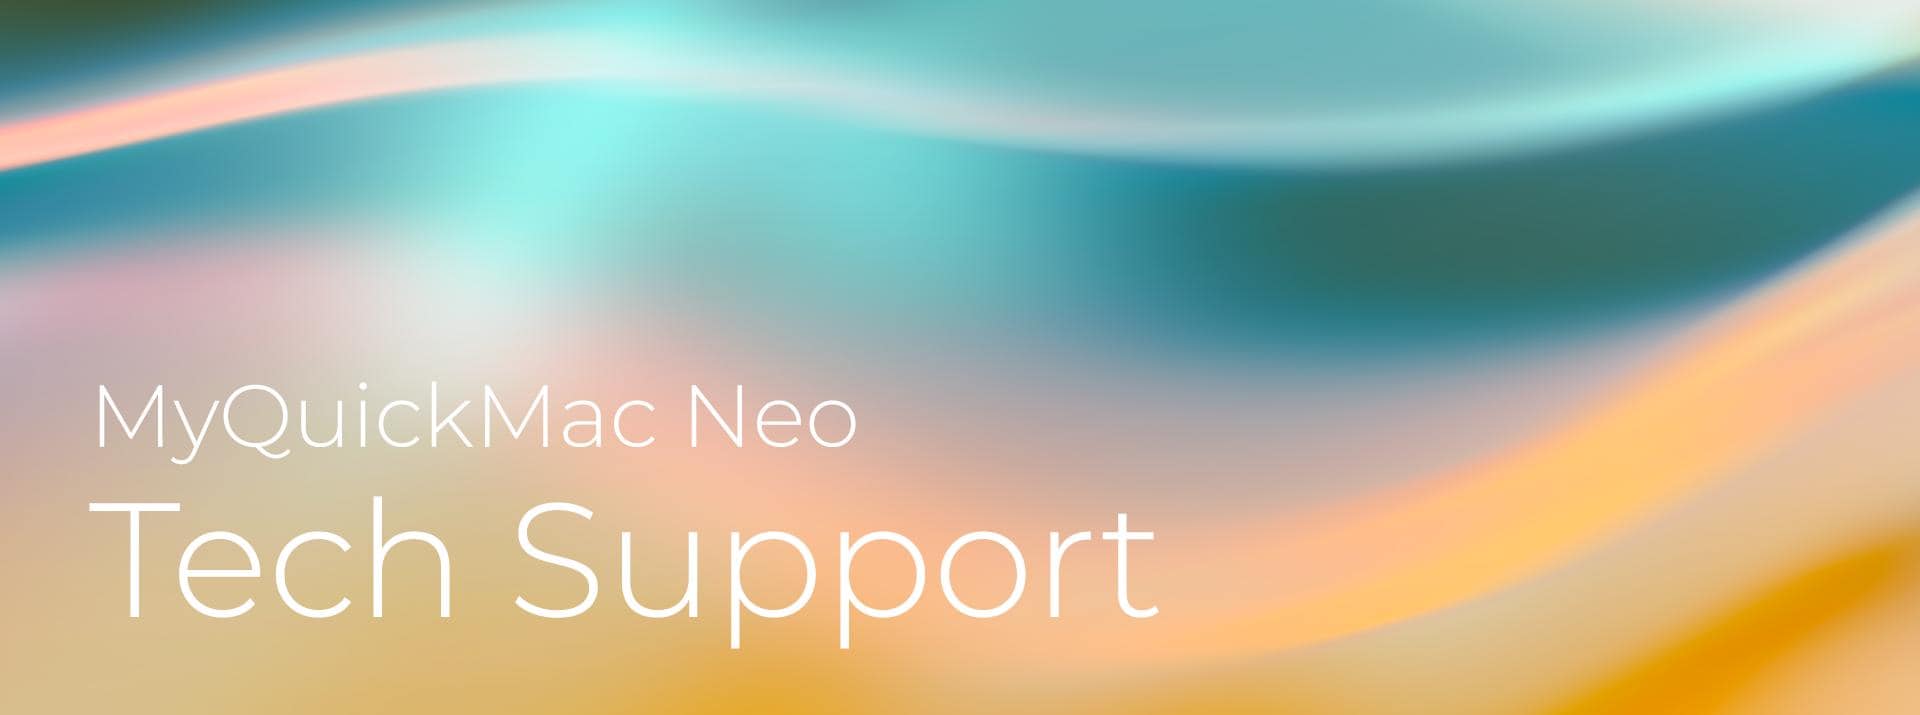 Ambeteco: MyQuickMac Neo Support